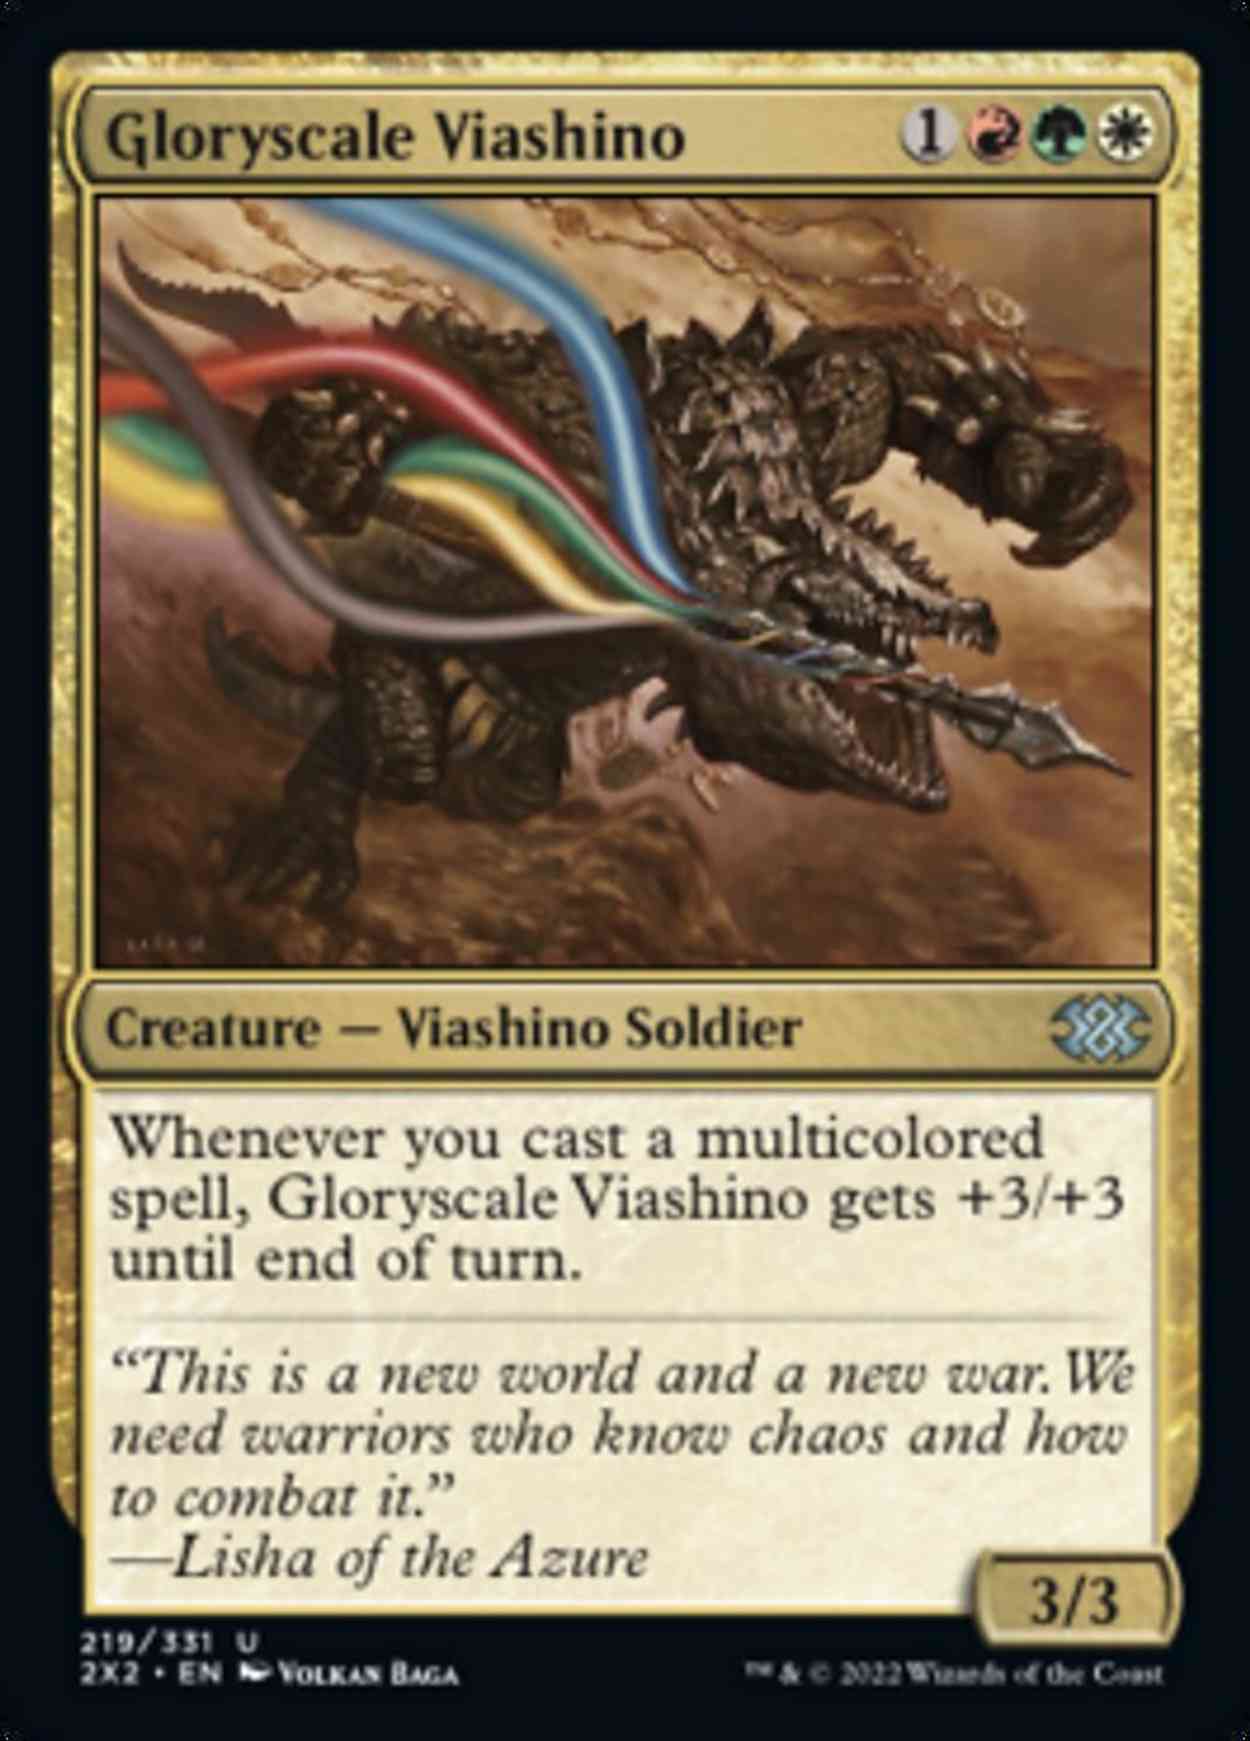 Gloryscale Viashino magic card front